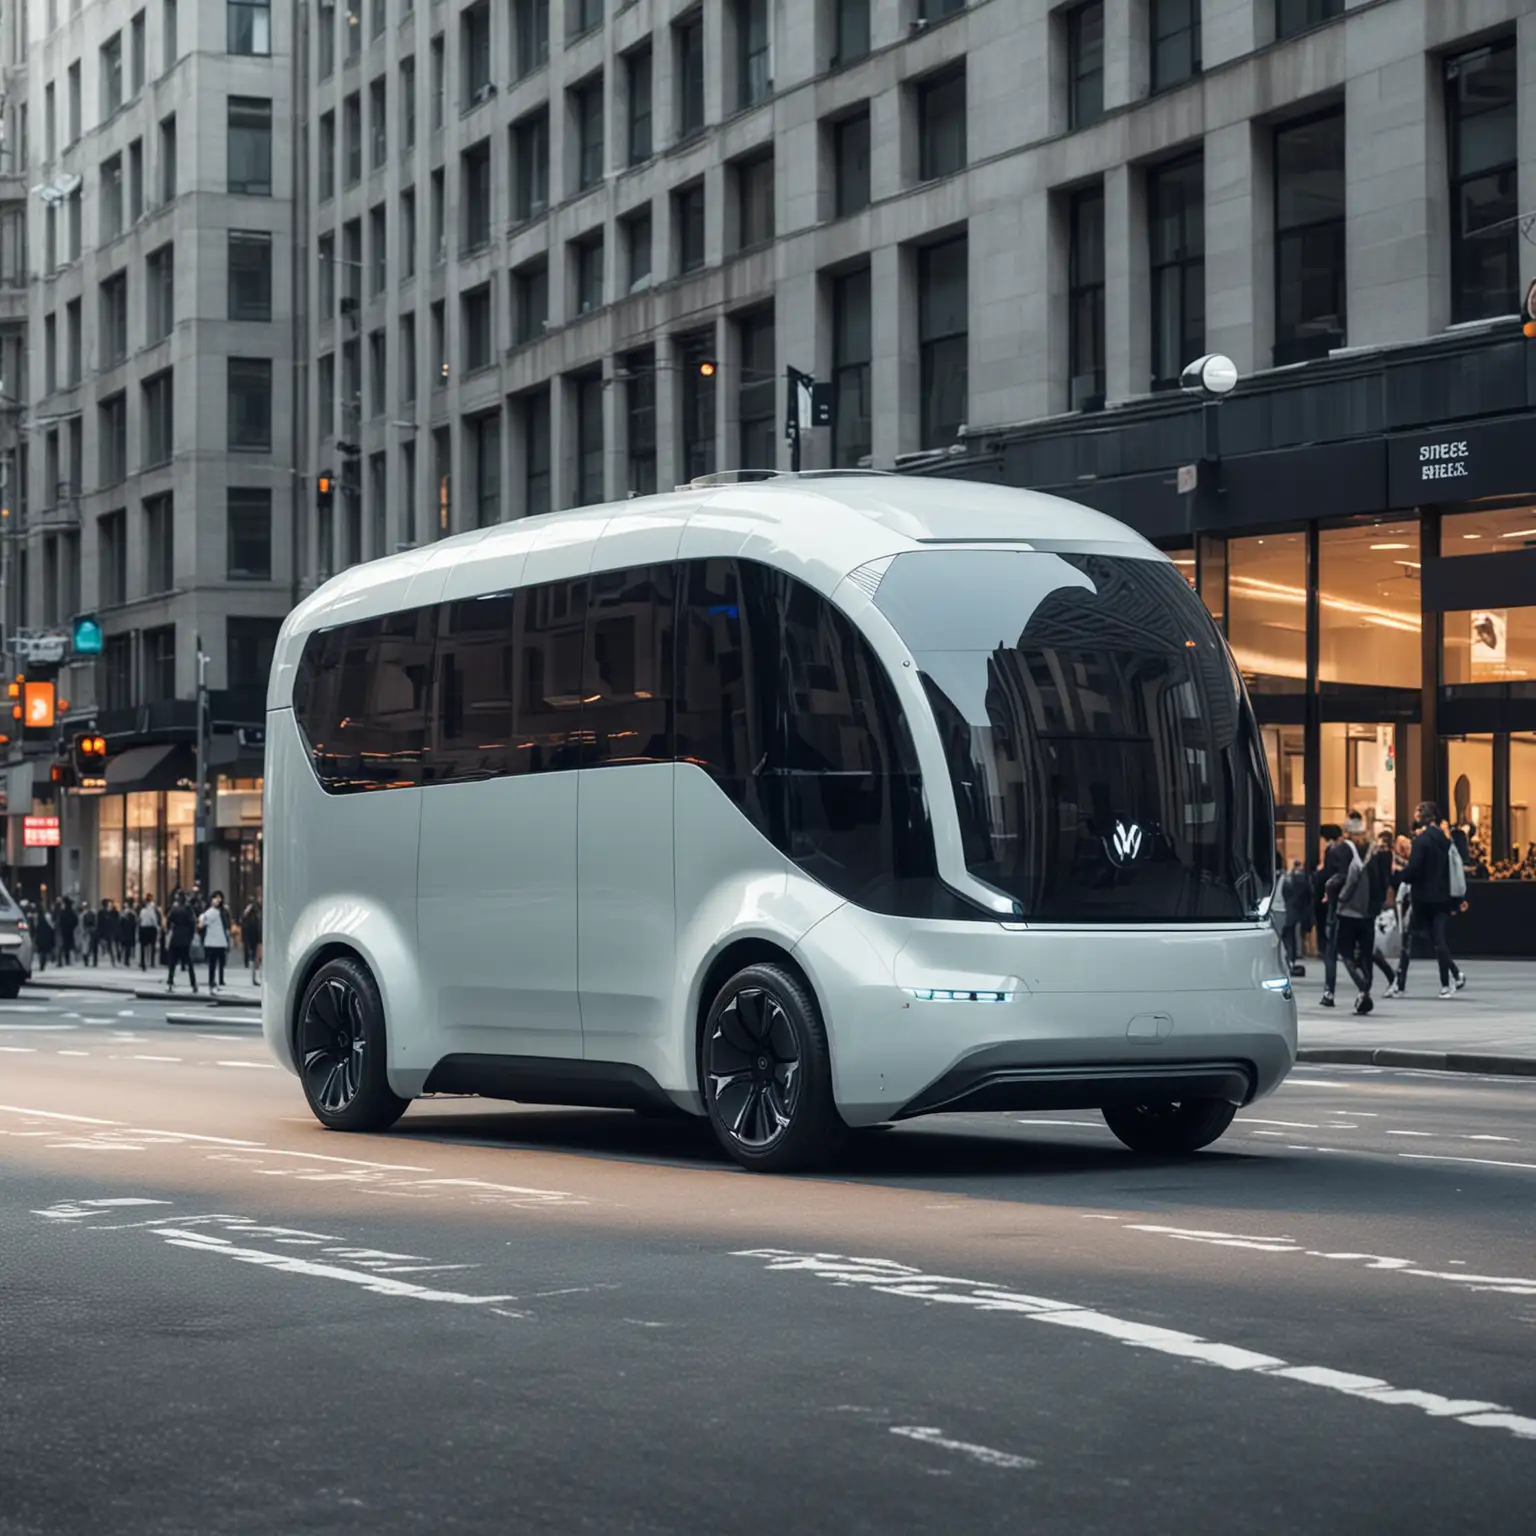 Futuristic Electric Van on Urban Street